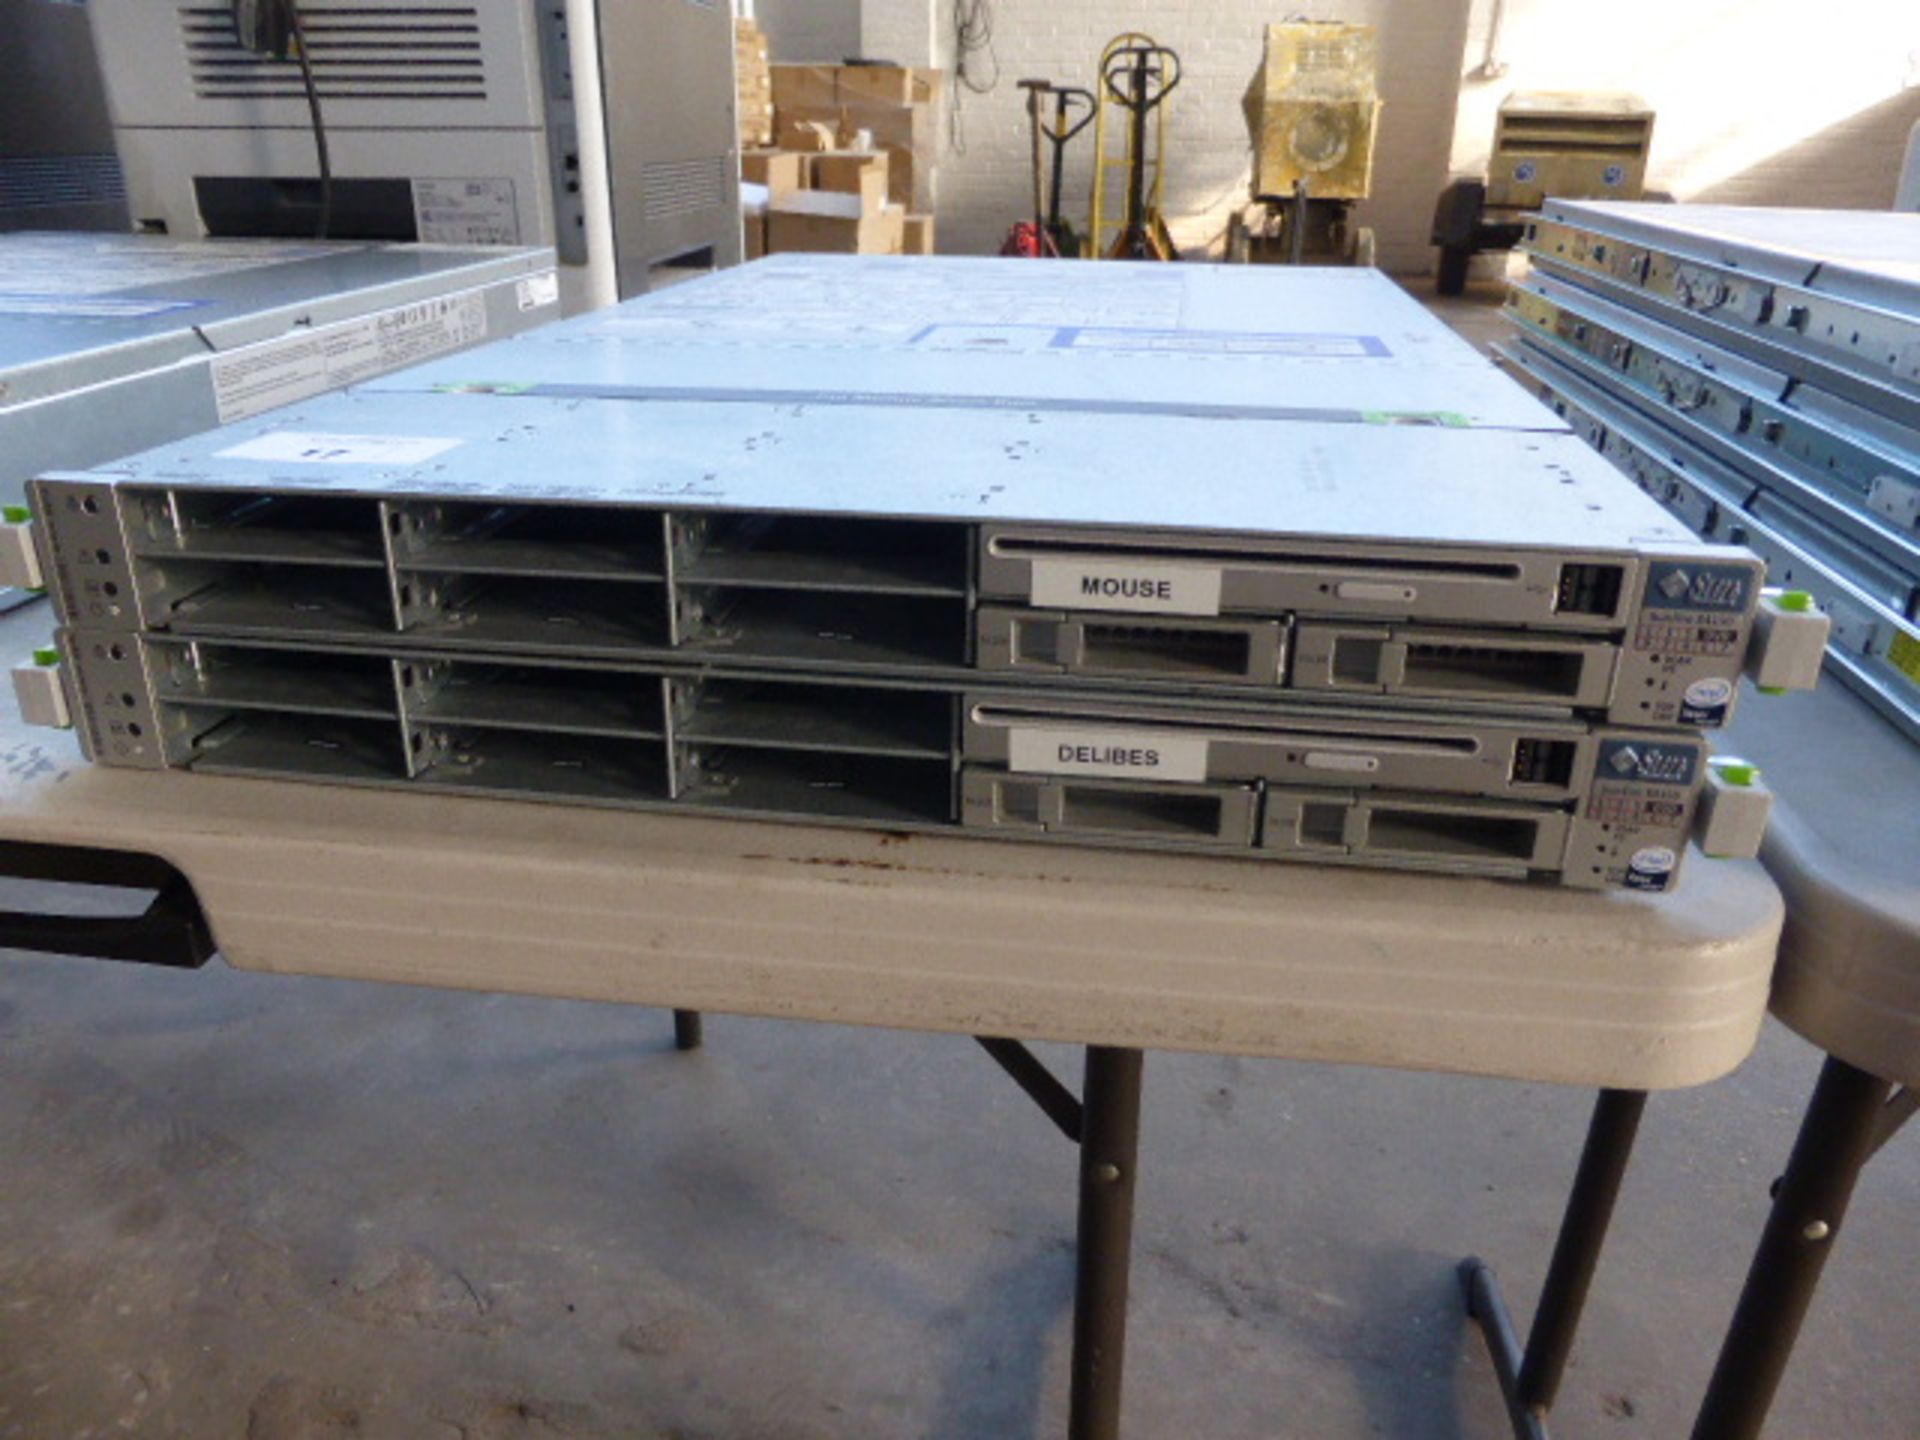 2 Sun Fire X4150 rack mounted servers, no hard drives